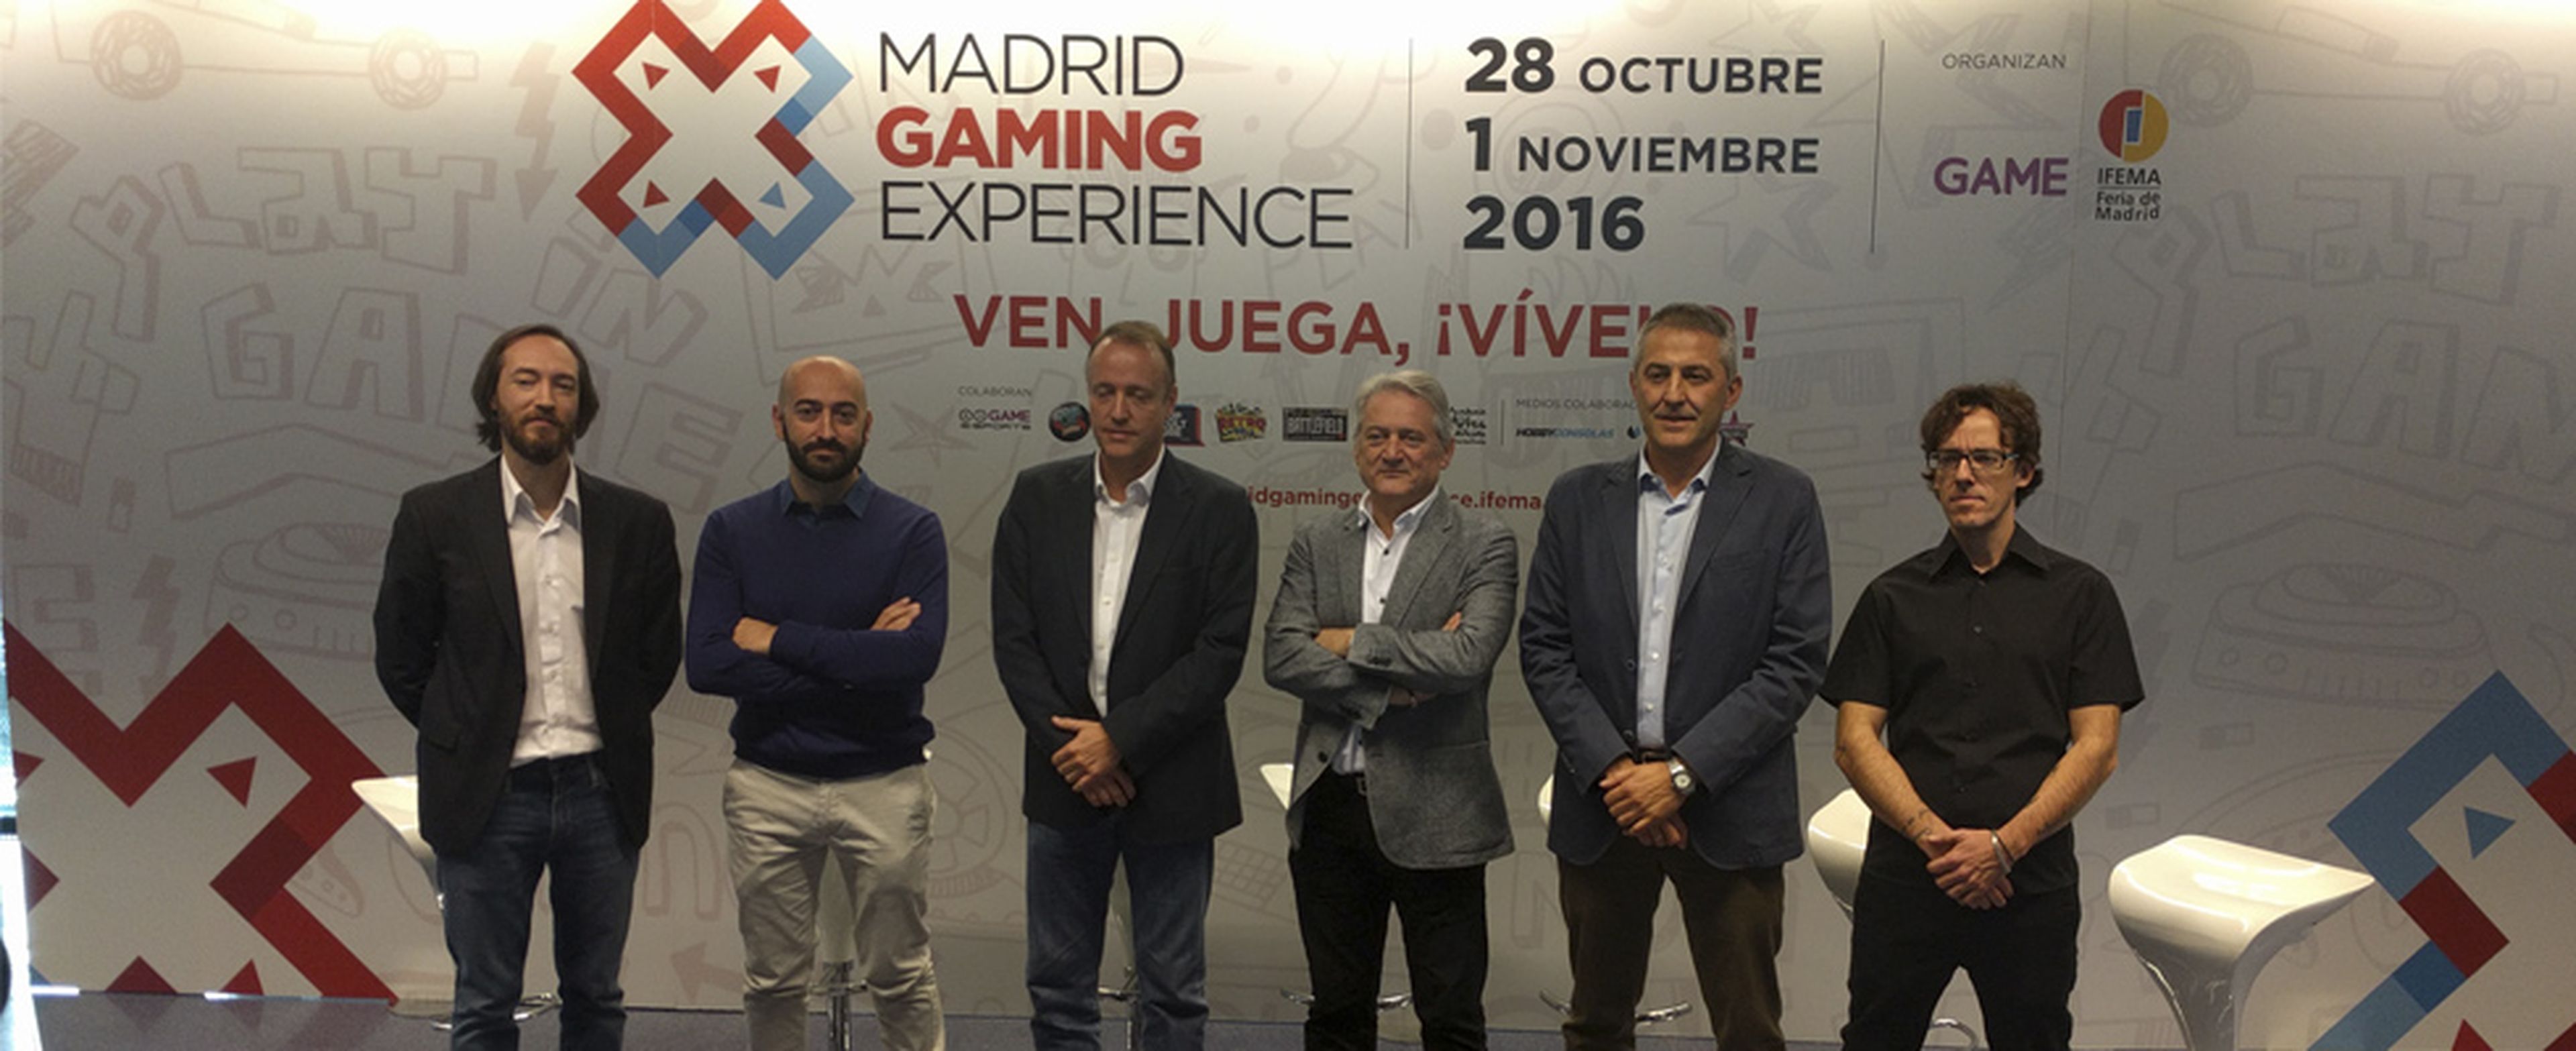 Madrid Gaming Experience cabecera nueva